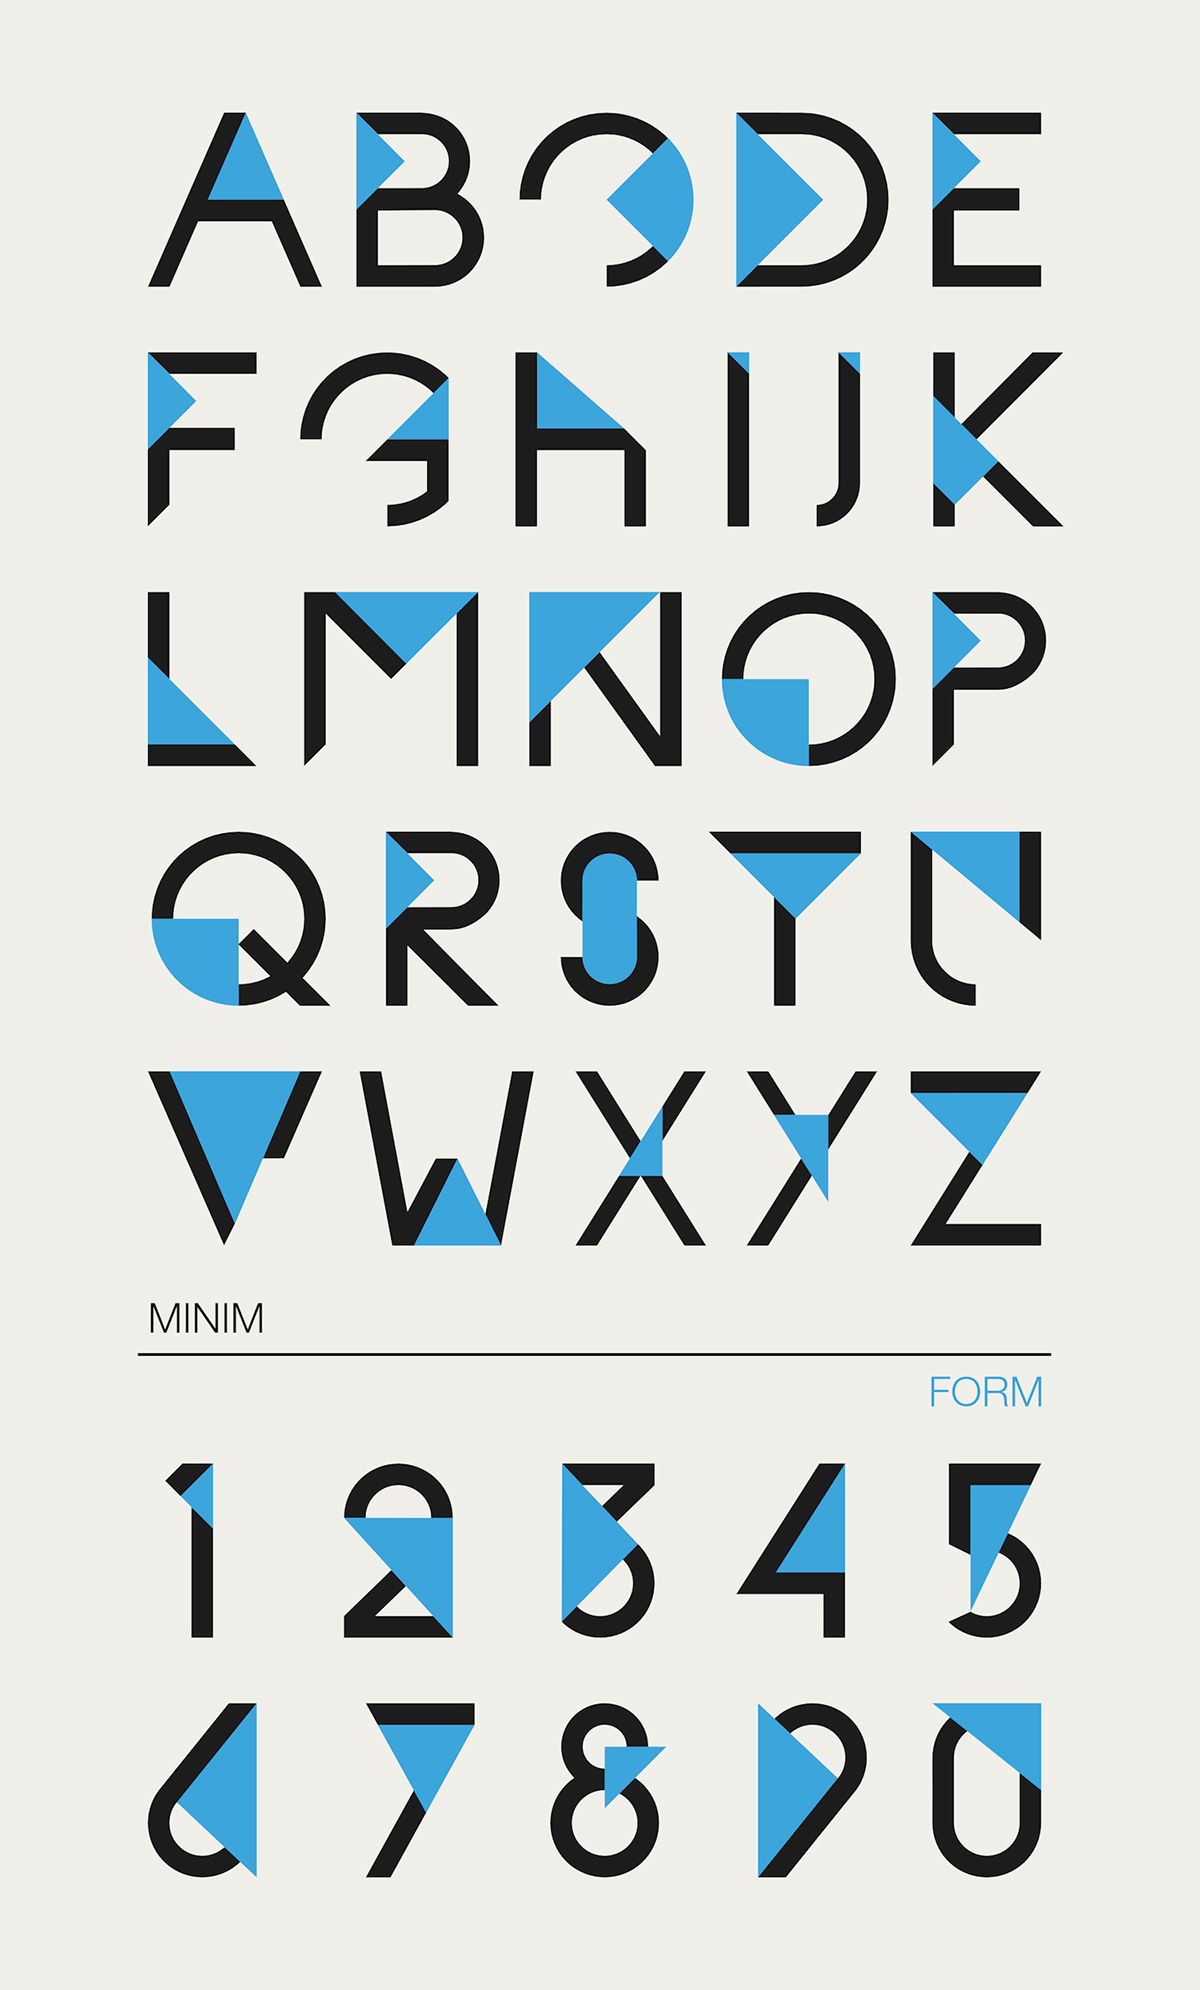 minim  minimalism  ion  typography font type simple  spherikal